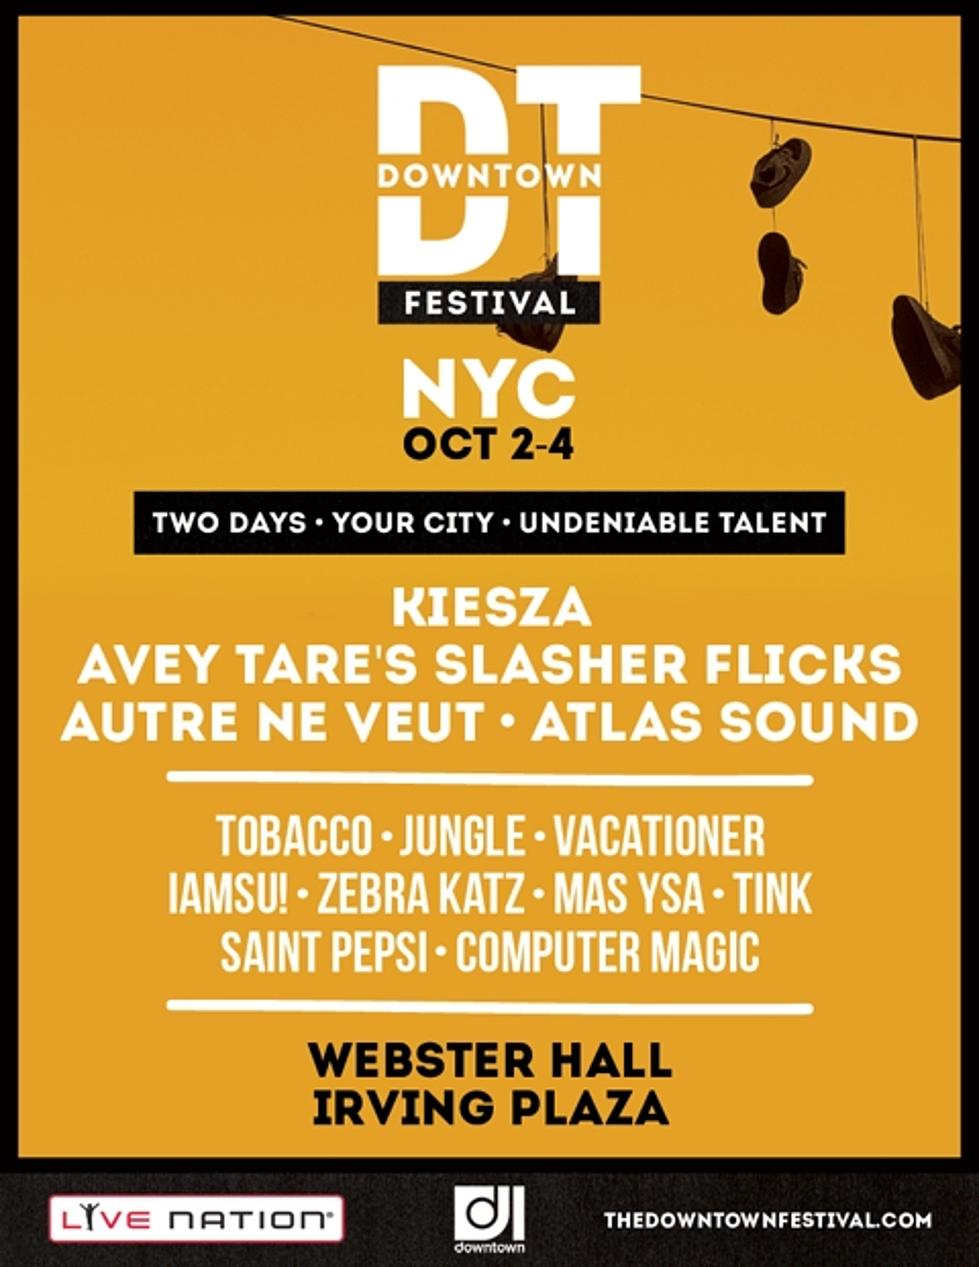 Downtown Festival doing 5 cities; NYC returning w/ Kiesza, Atlas Sound, Autre Ne Veut, Zebra Katz, Avey Tare, more